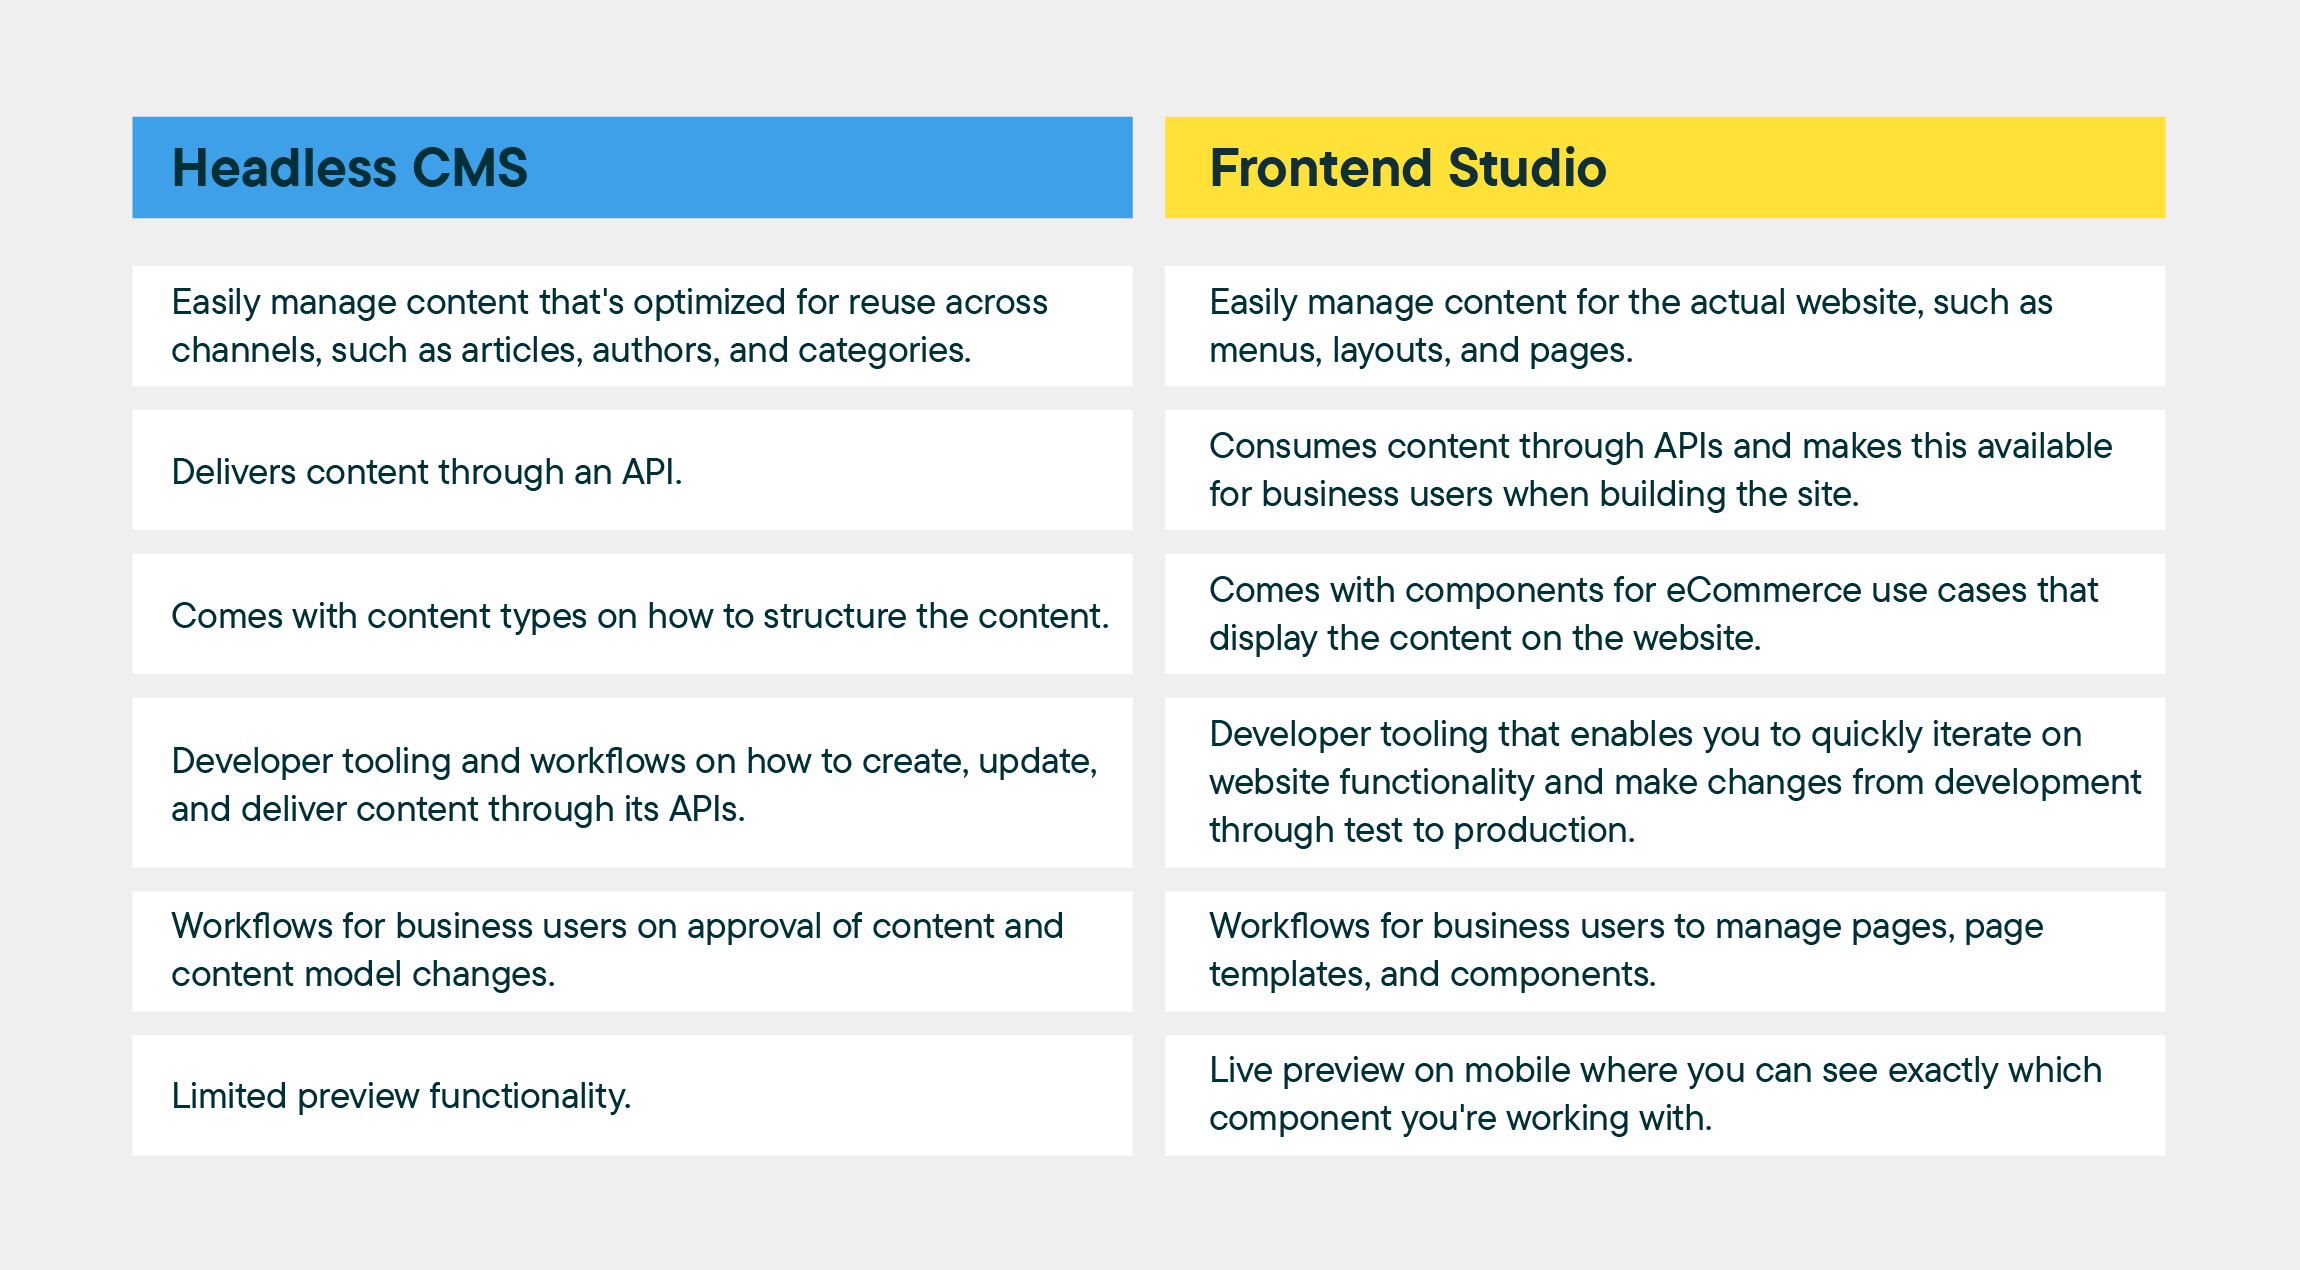 Headless CMS vs. Frontend Studio